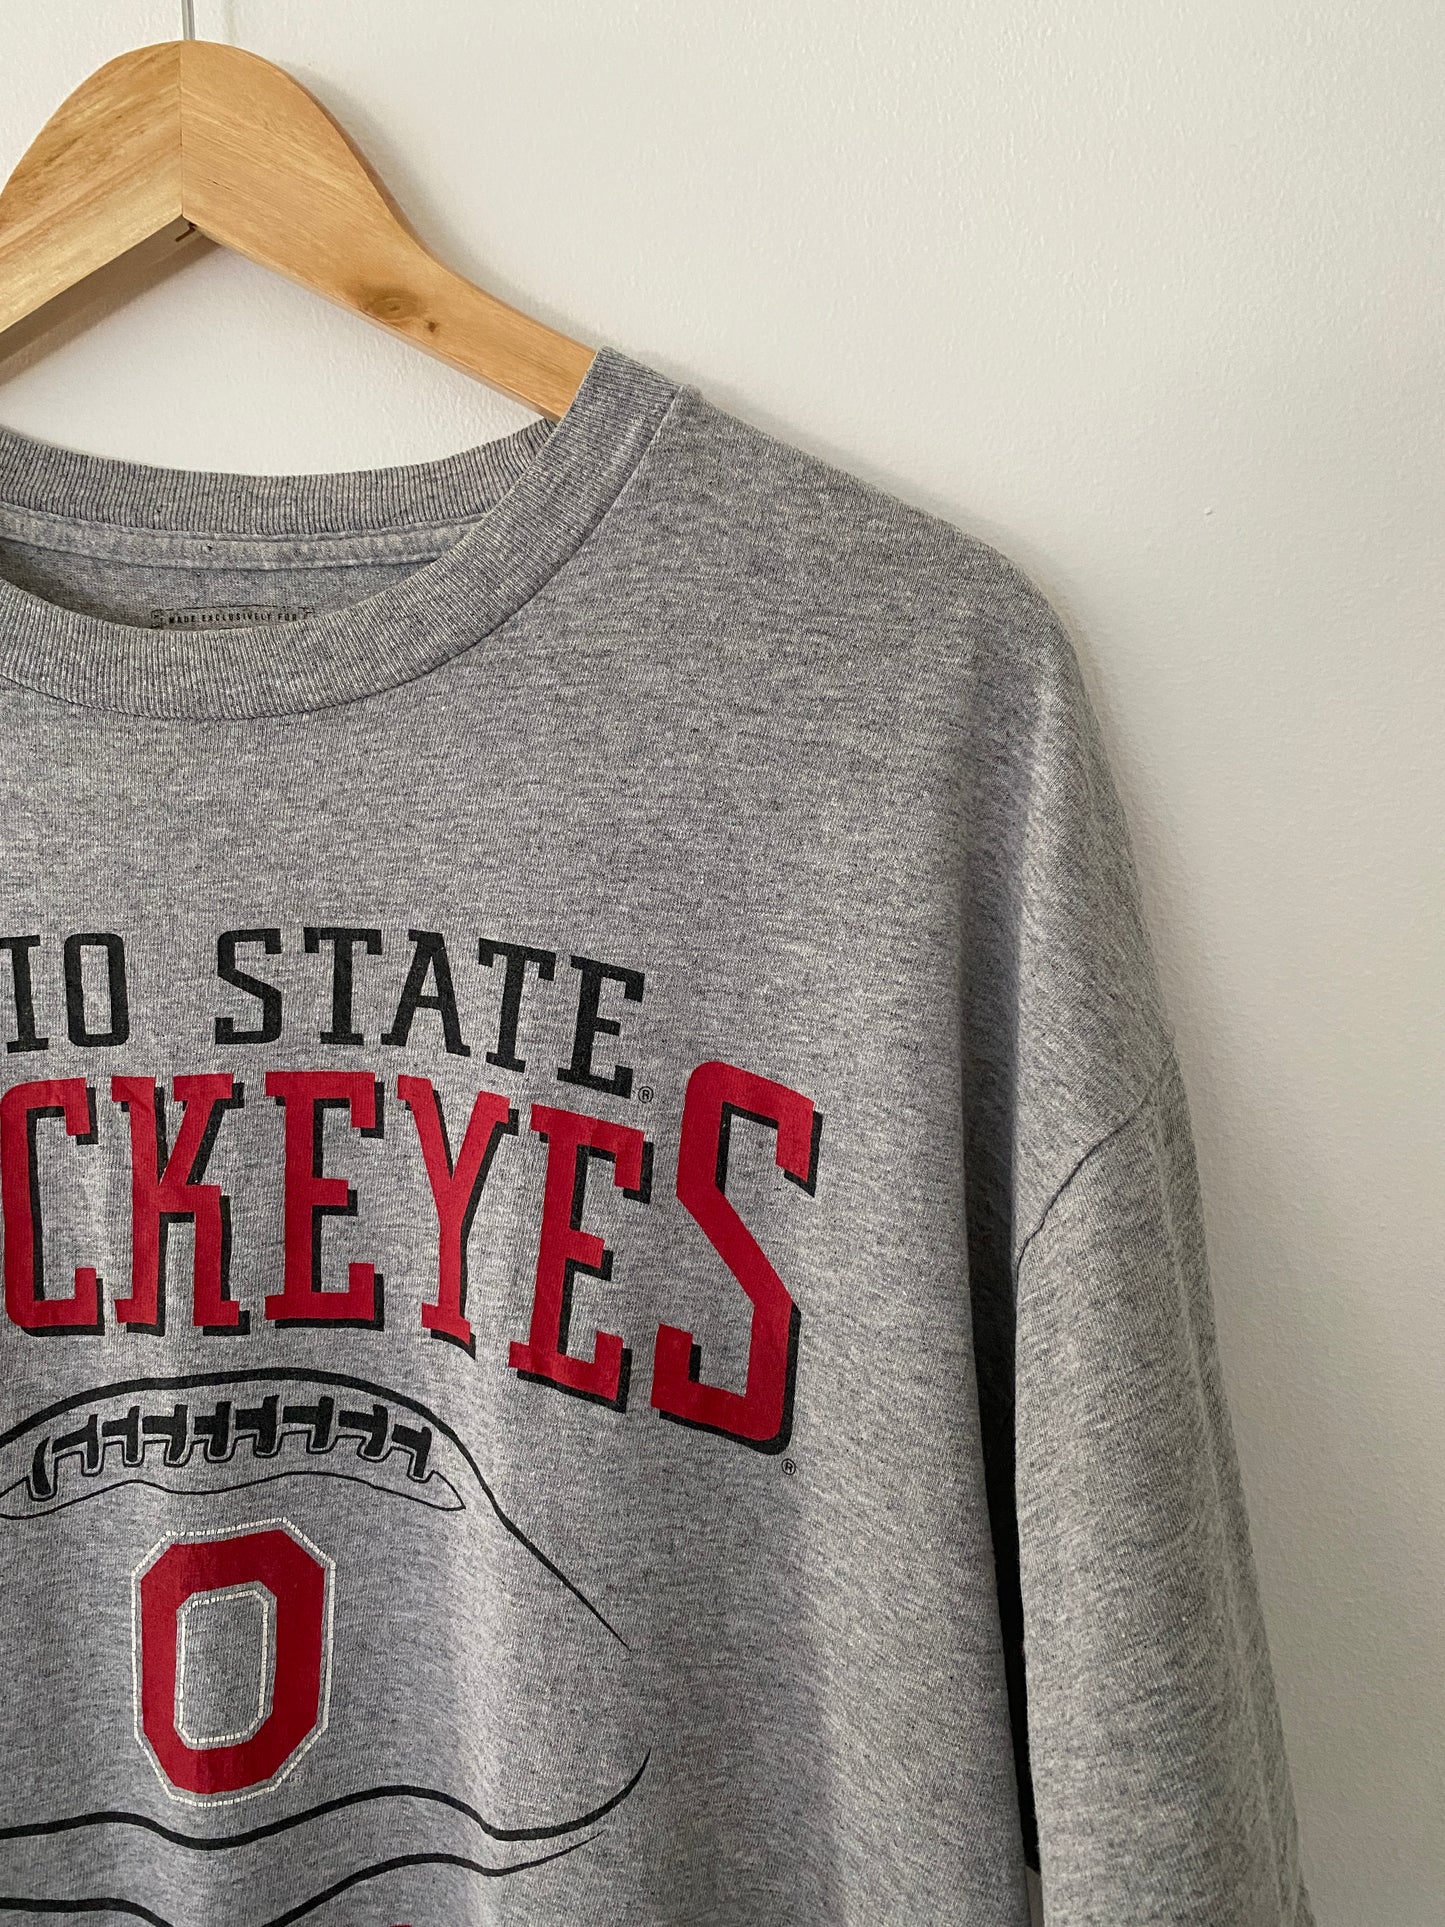 Ohio State Buckeyes T-Shirt - L